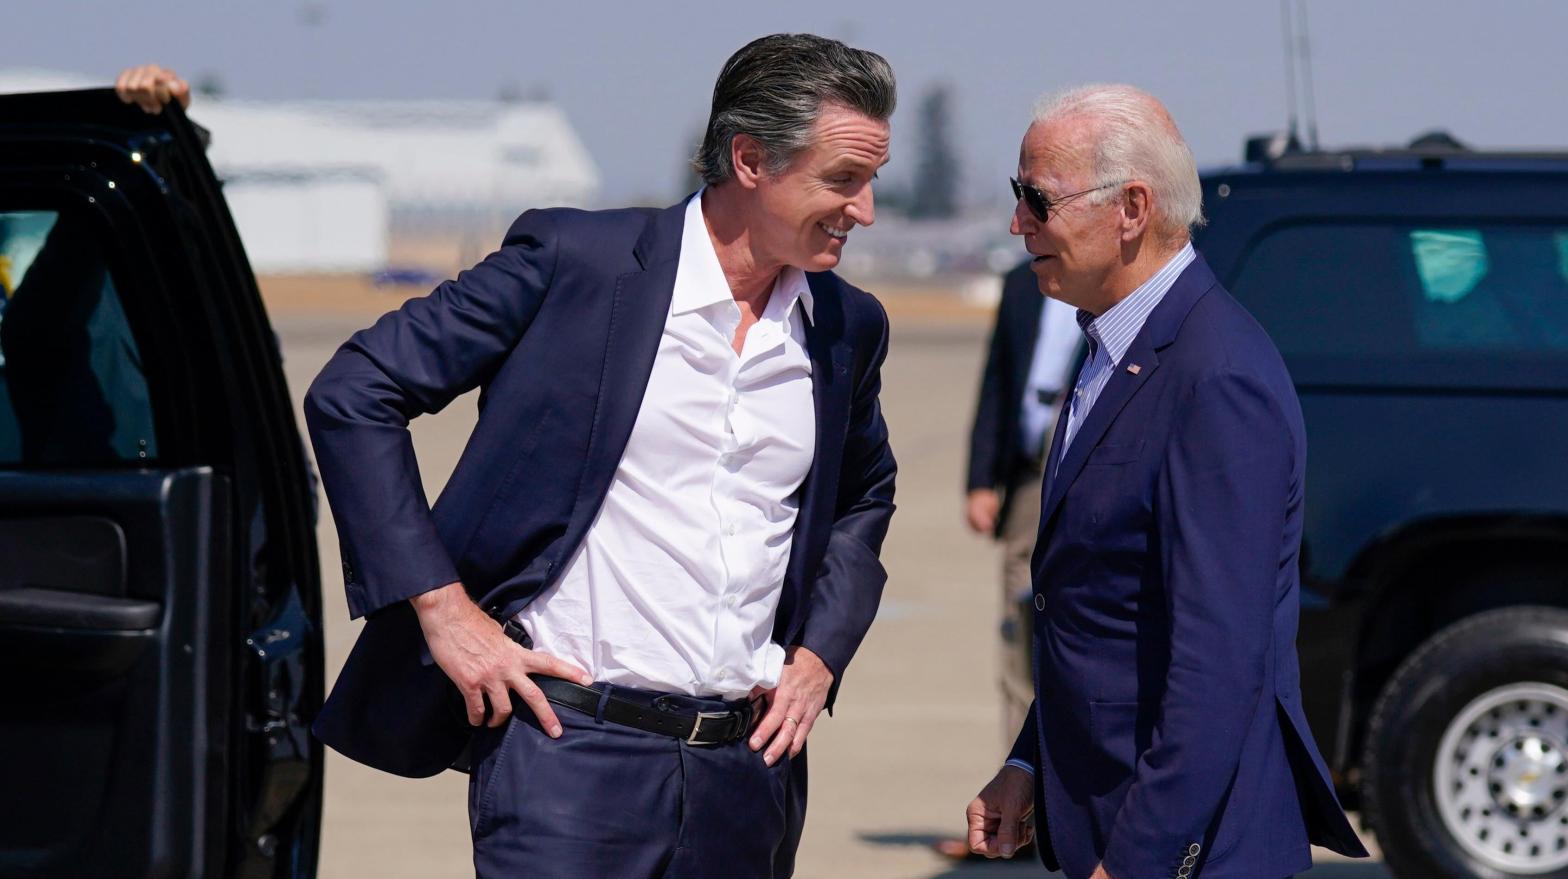 President Joe Biden talks with California Gov. Gavin Newsom as he arrives at Mather Airport on Air Force One Monday, Sept. 13, 2021. (Photo: Evan Vucci, AP)